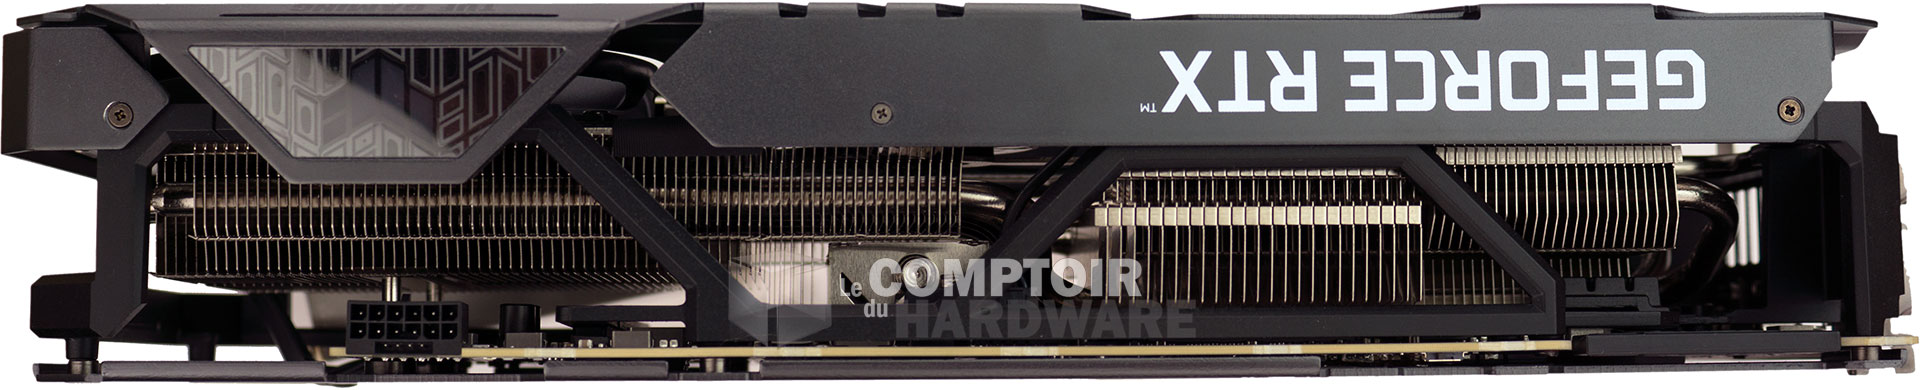 Asus TUF RTX 3090 Ti Gaming : alimentation PCIe 5